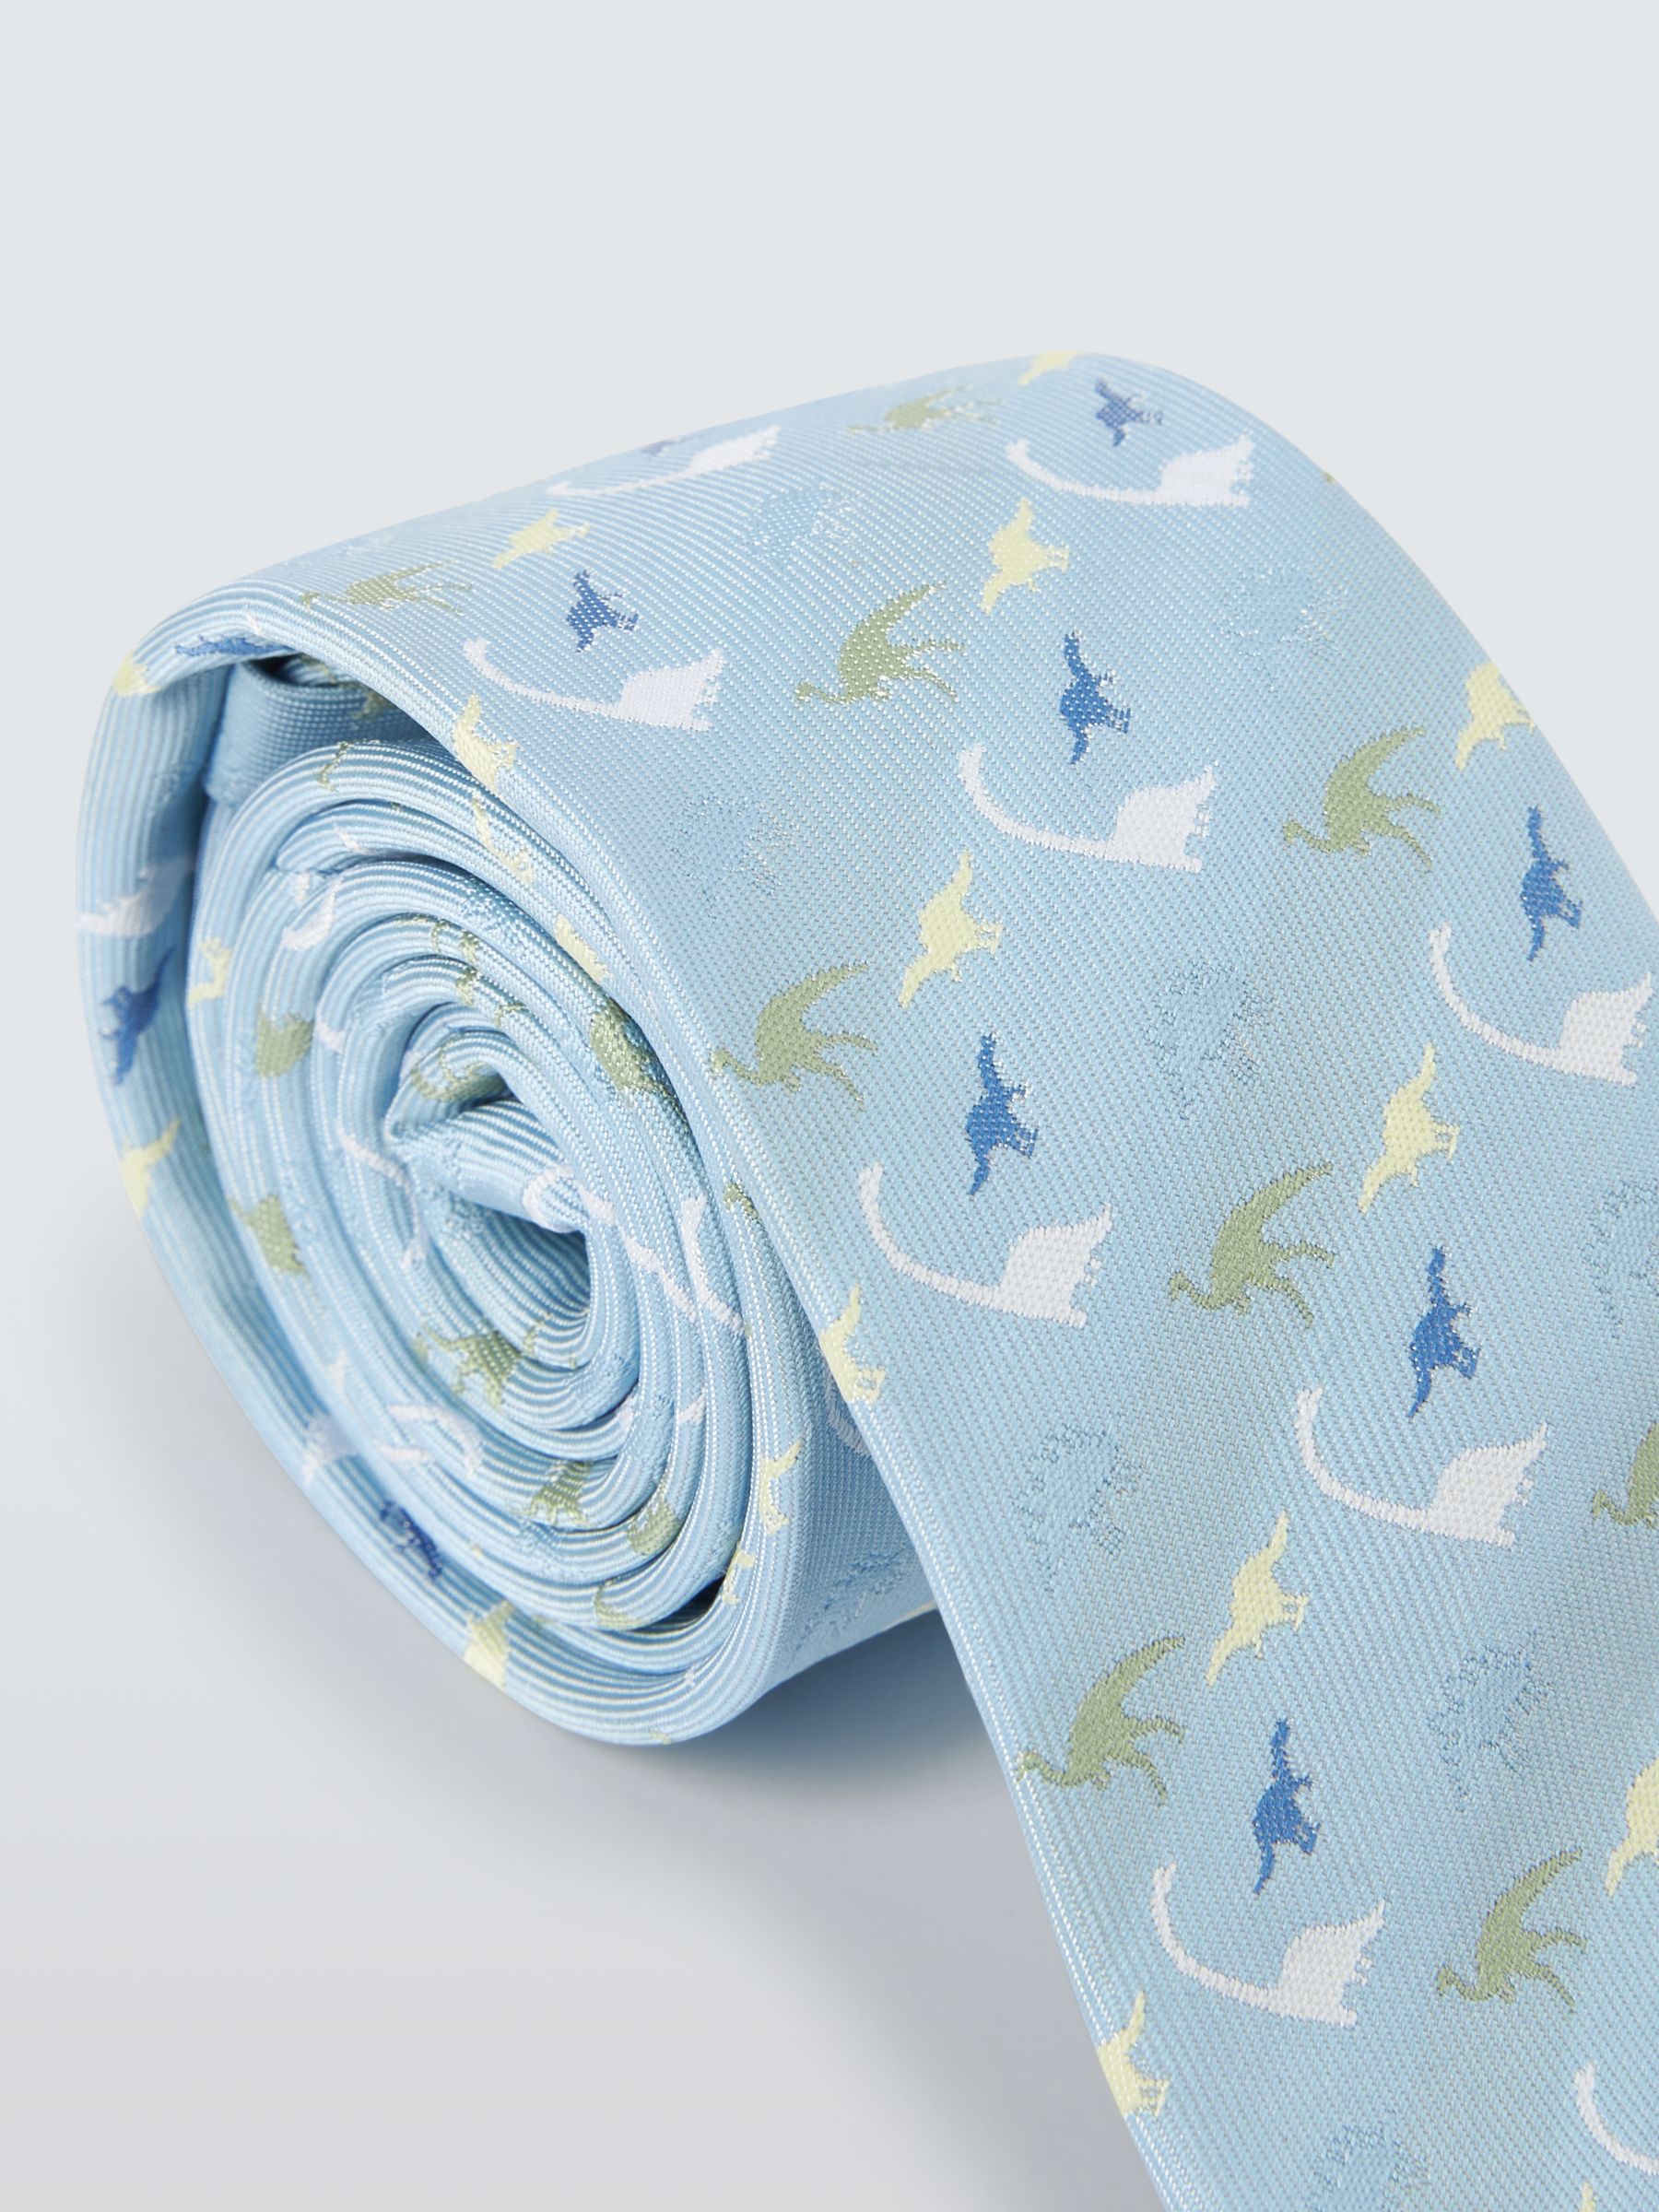 John Lewis Kids' Dinosaur Print Tie, Blue, S-M